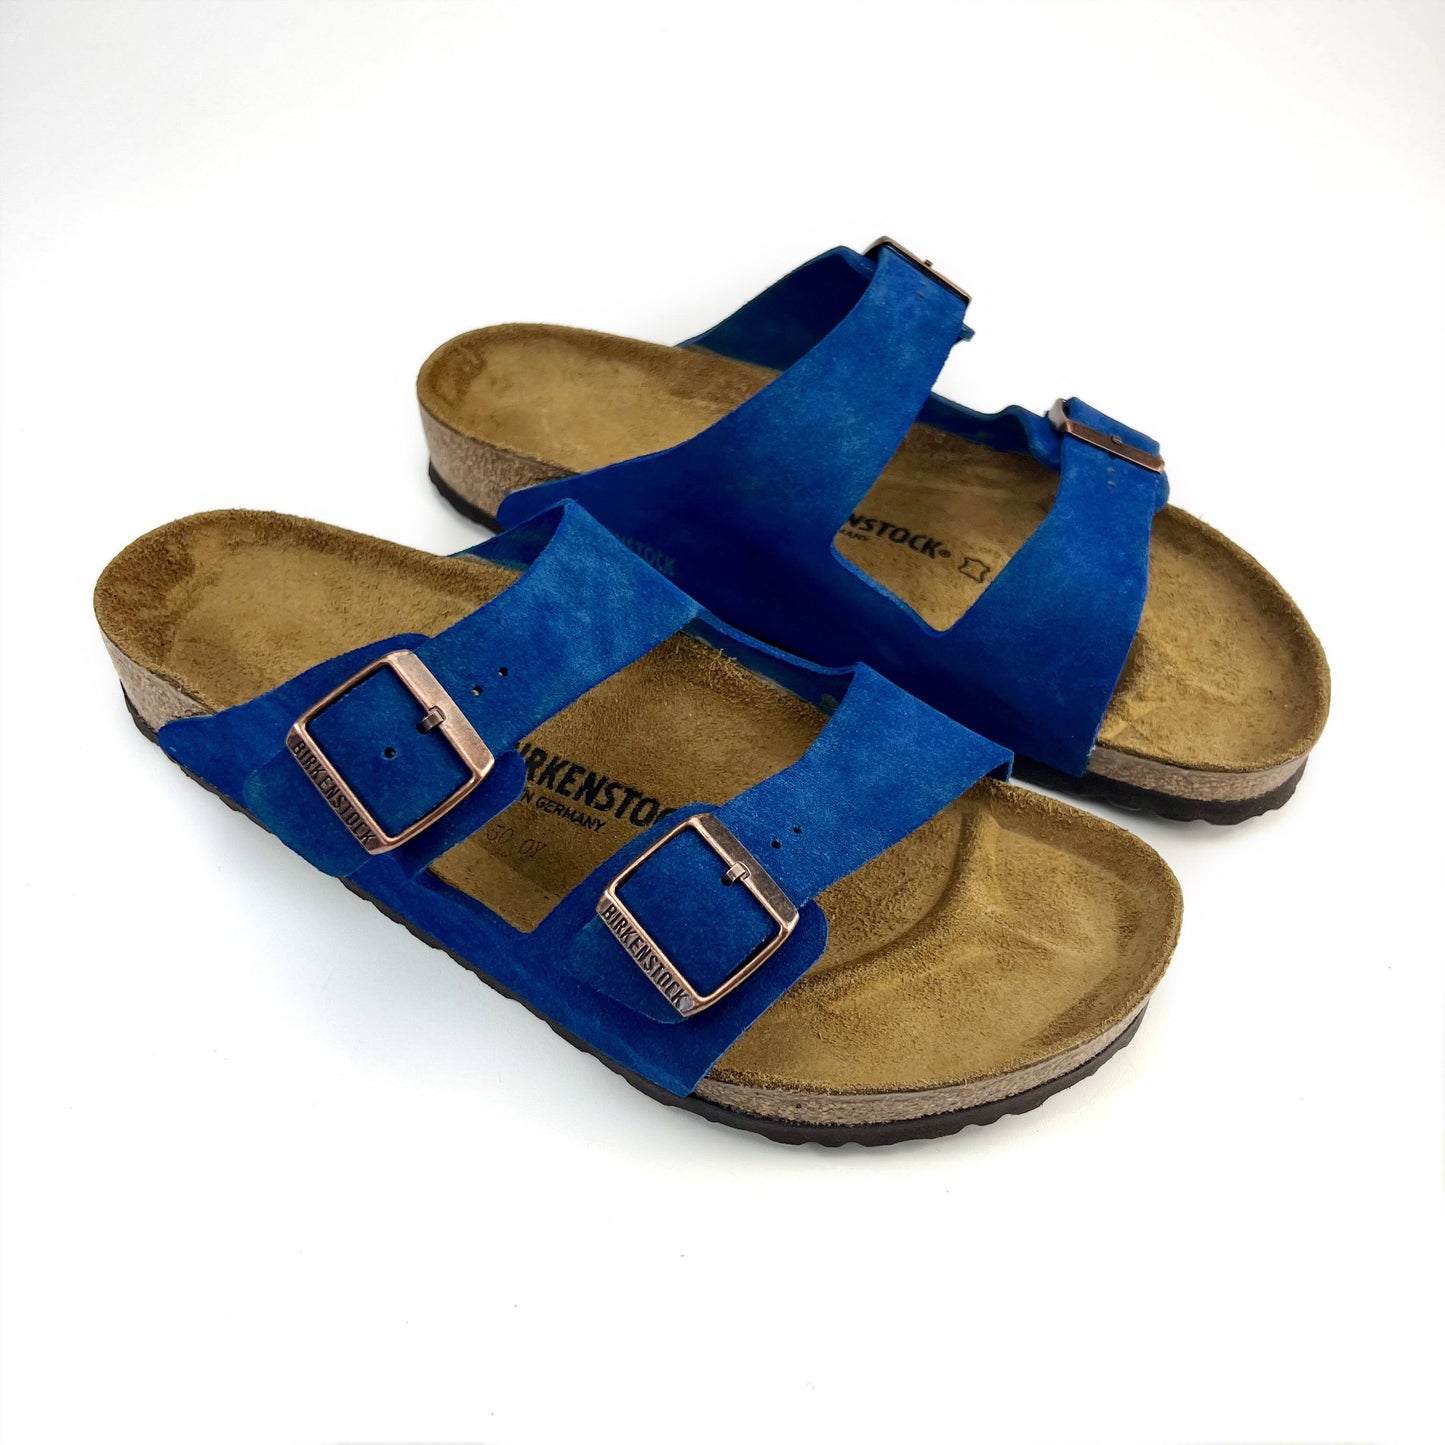 Royal Blue Arizona Birkenstock sandals with bronze buckles & white background